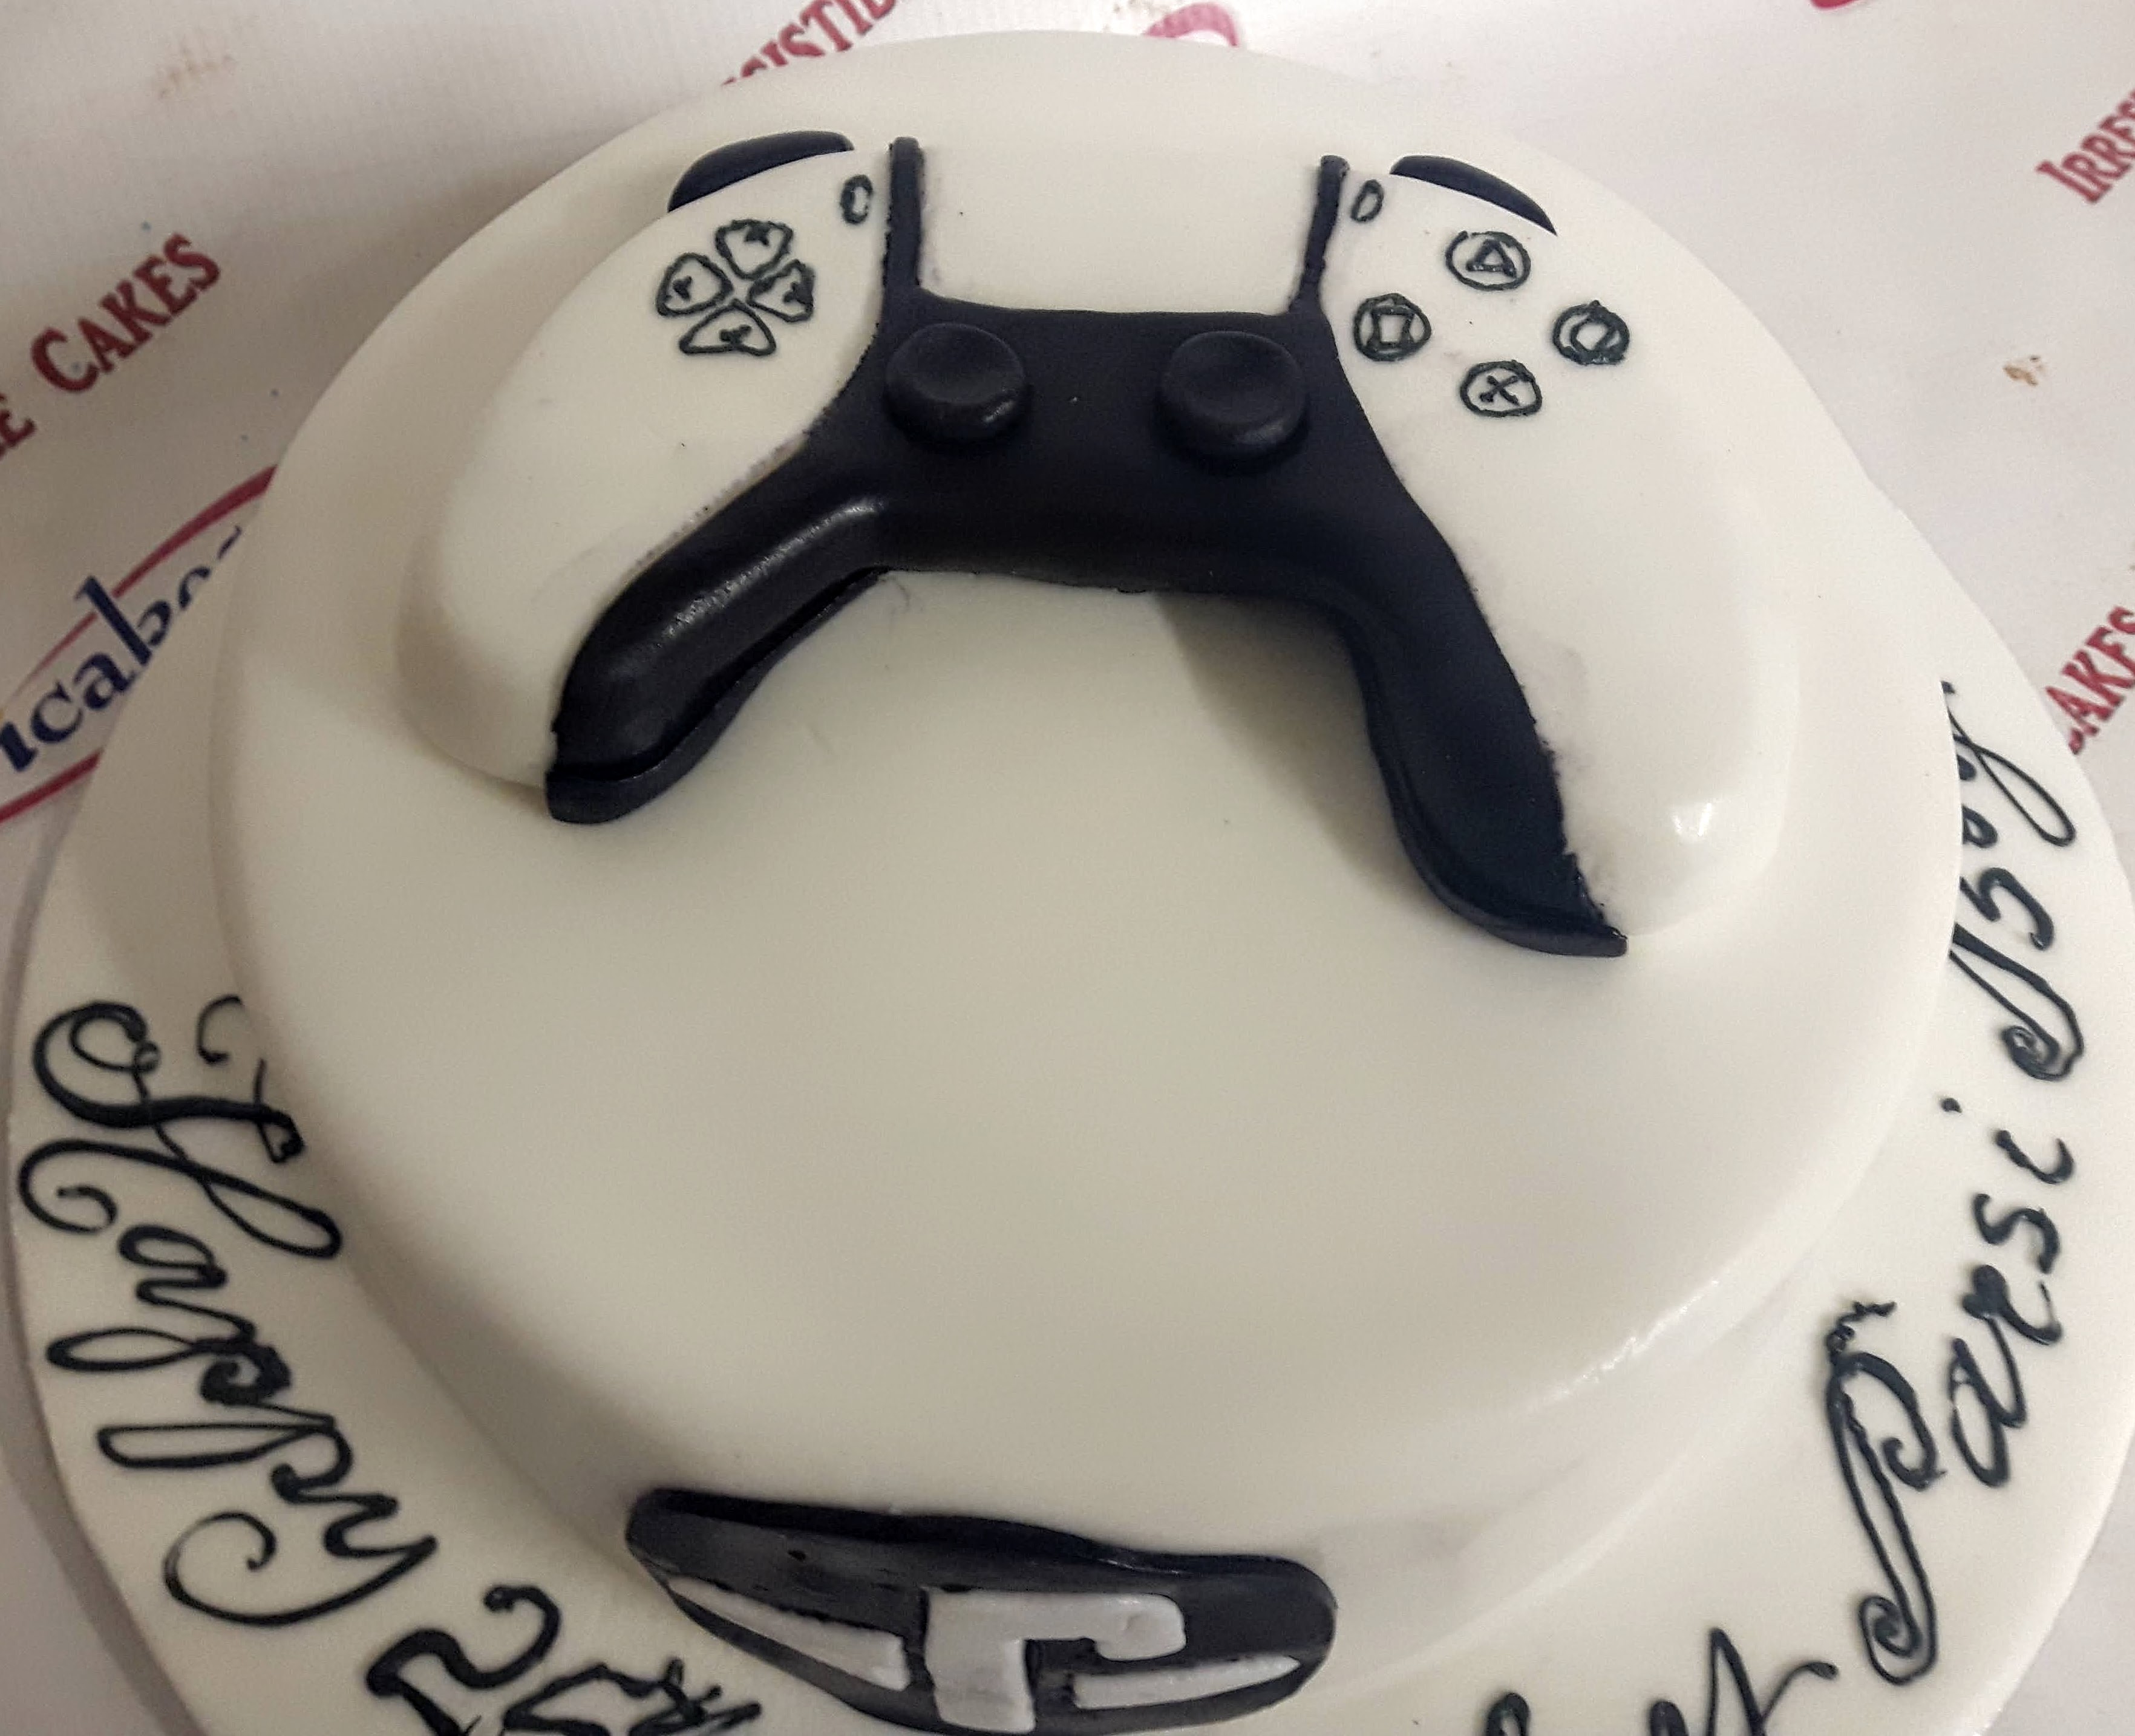 PS5 Play Station ConsoleFondant Birthday Cake From Irreistiblke Cakes Scarborough